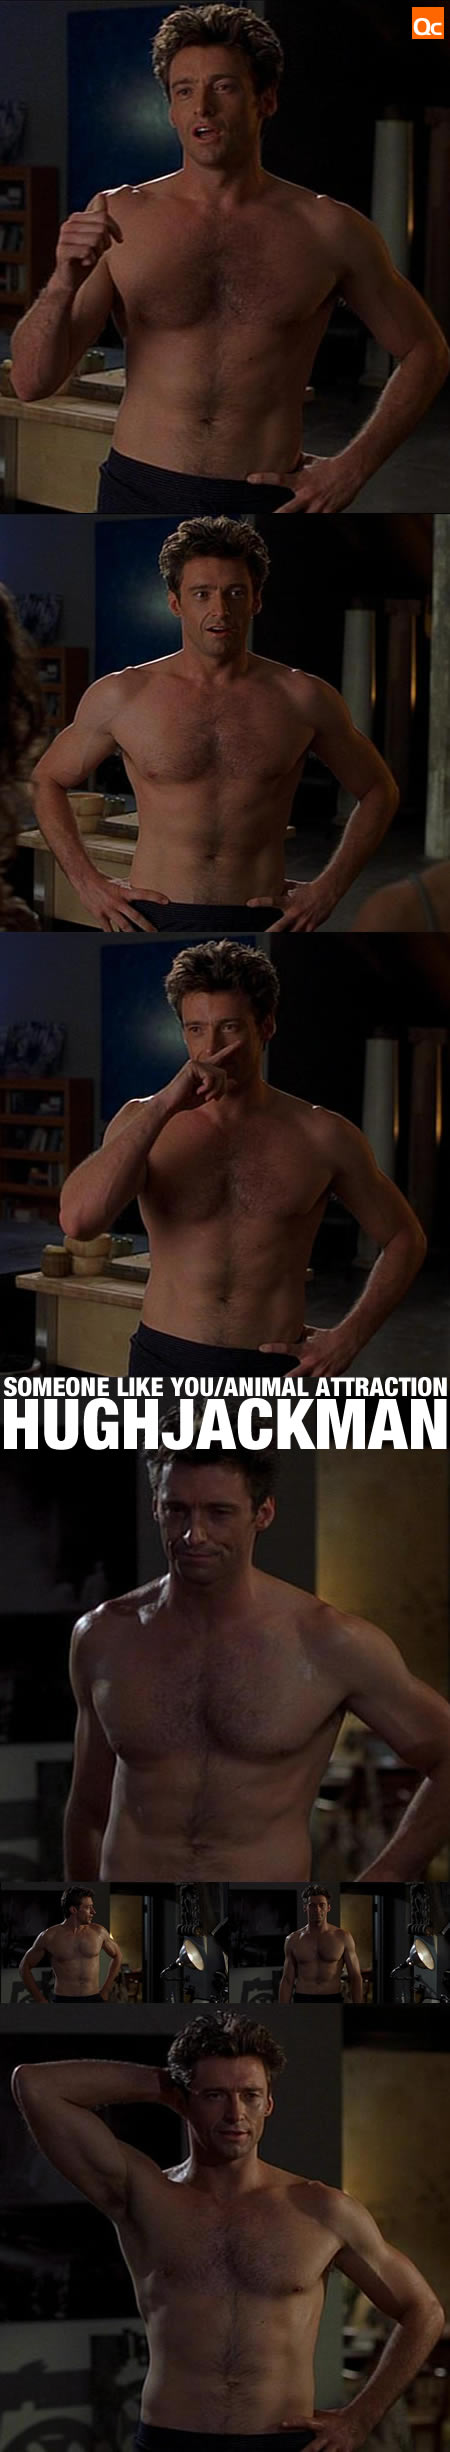 Hugh Jackman in the buff!